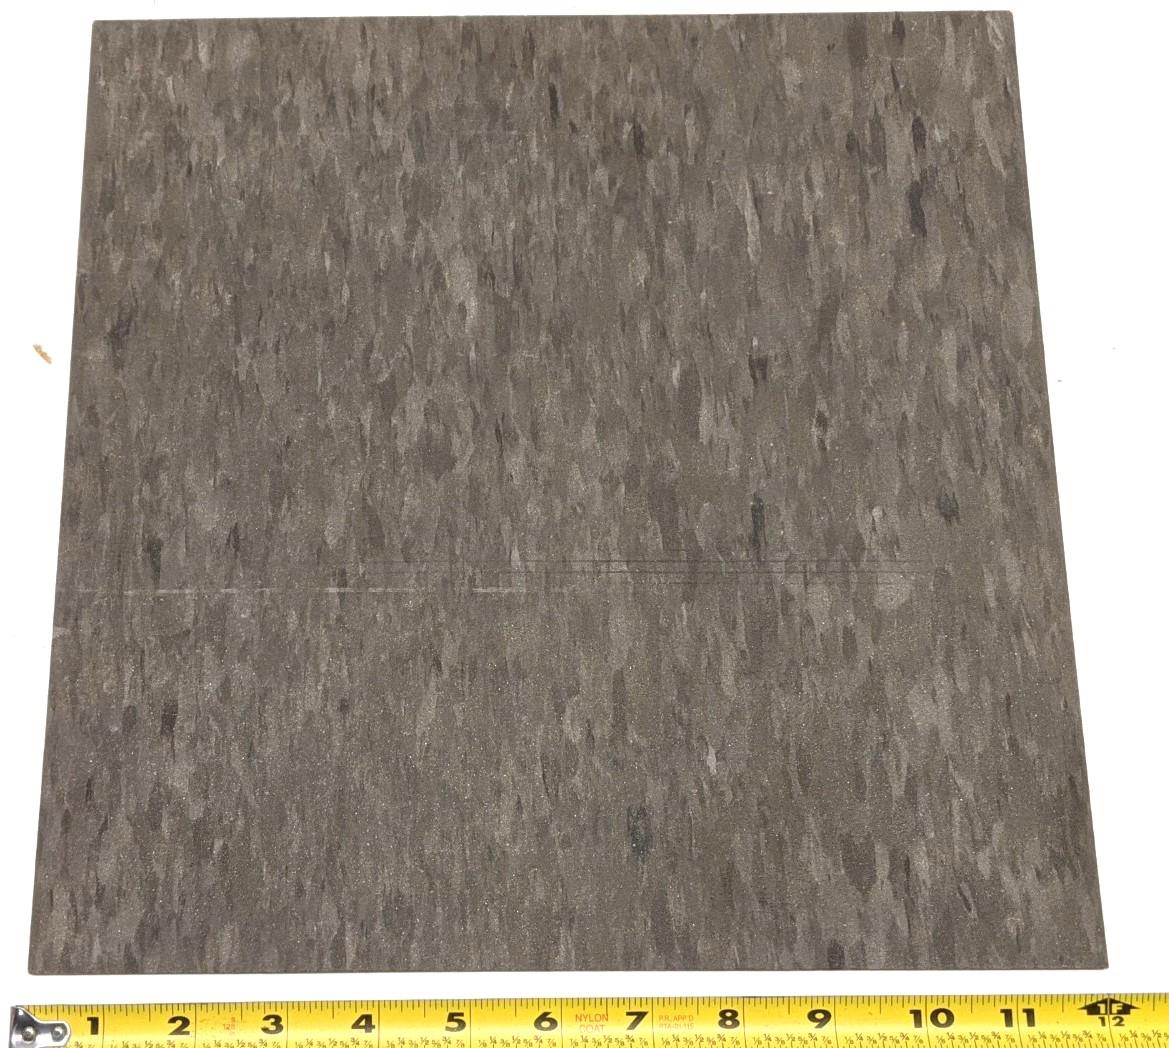 SP-2832 | Mannington Commercial Tile VCT Pattern (3).jpg